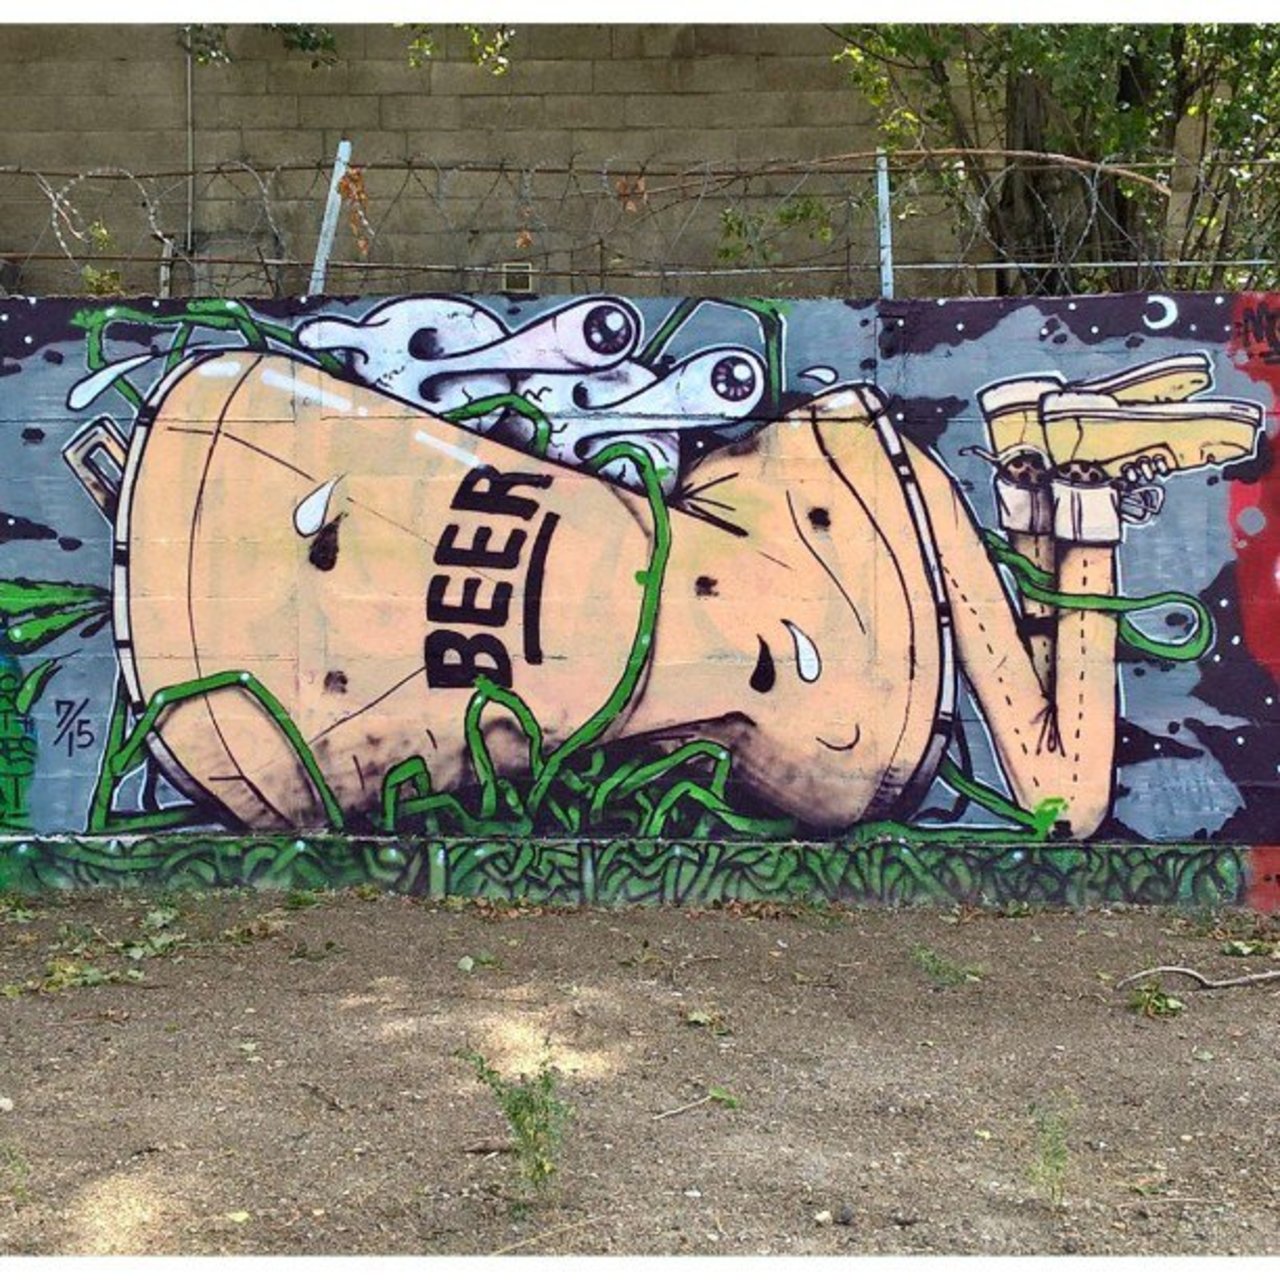 KRSN
#KRSN #JanGaret #streetart #graffiti #graff #art #fatcap #bombing #sprayart #spraycanart #wallart #handstyle #… https://t.co/khkA2RLWoT